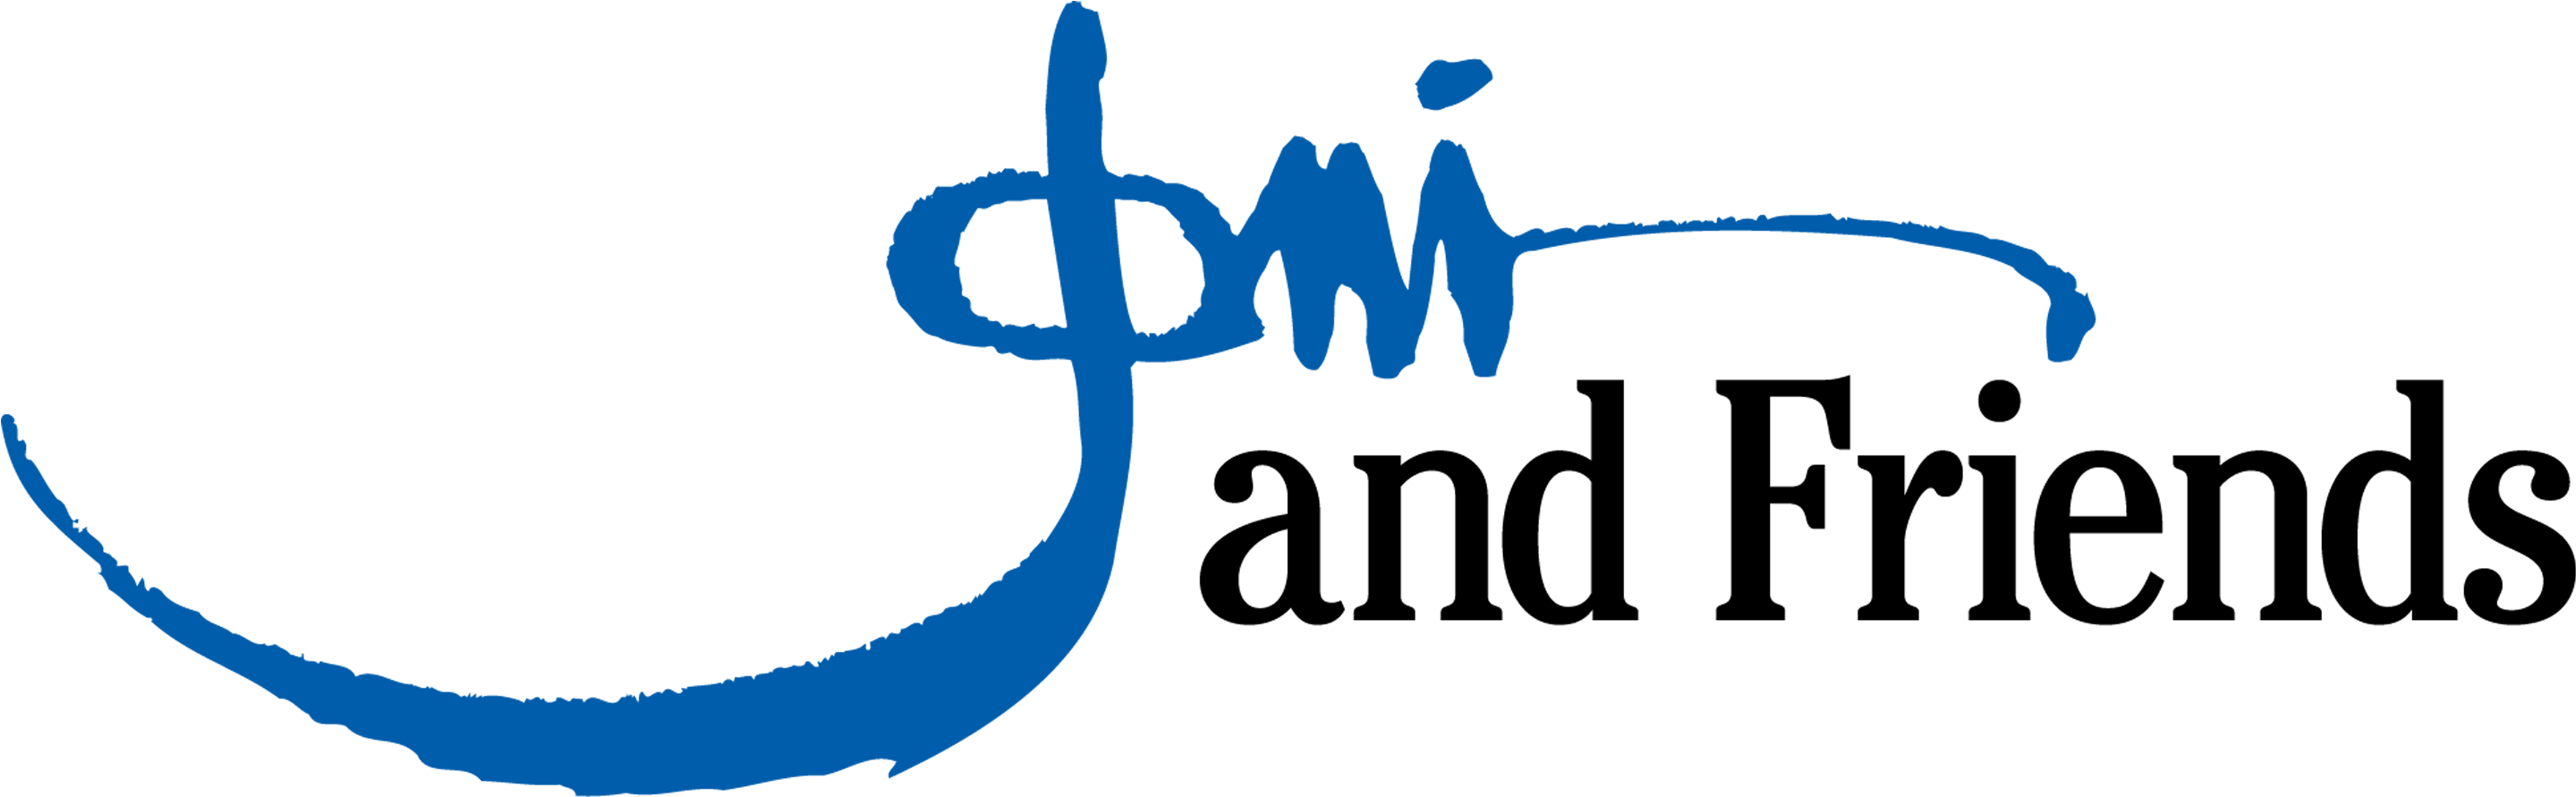 Joni And Friends Logo (2878x1200)